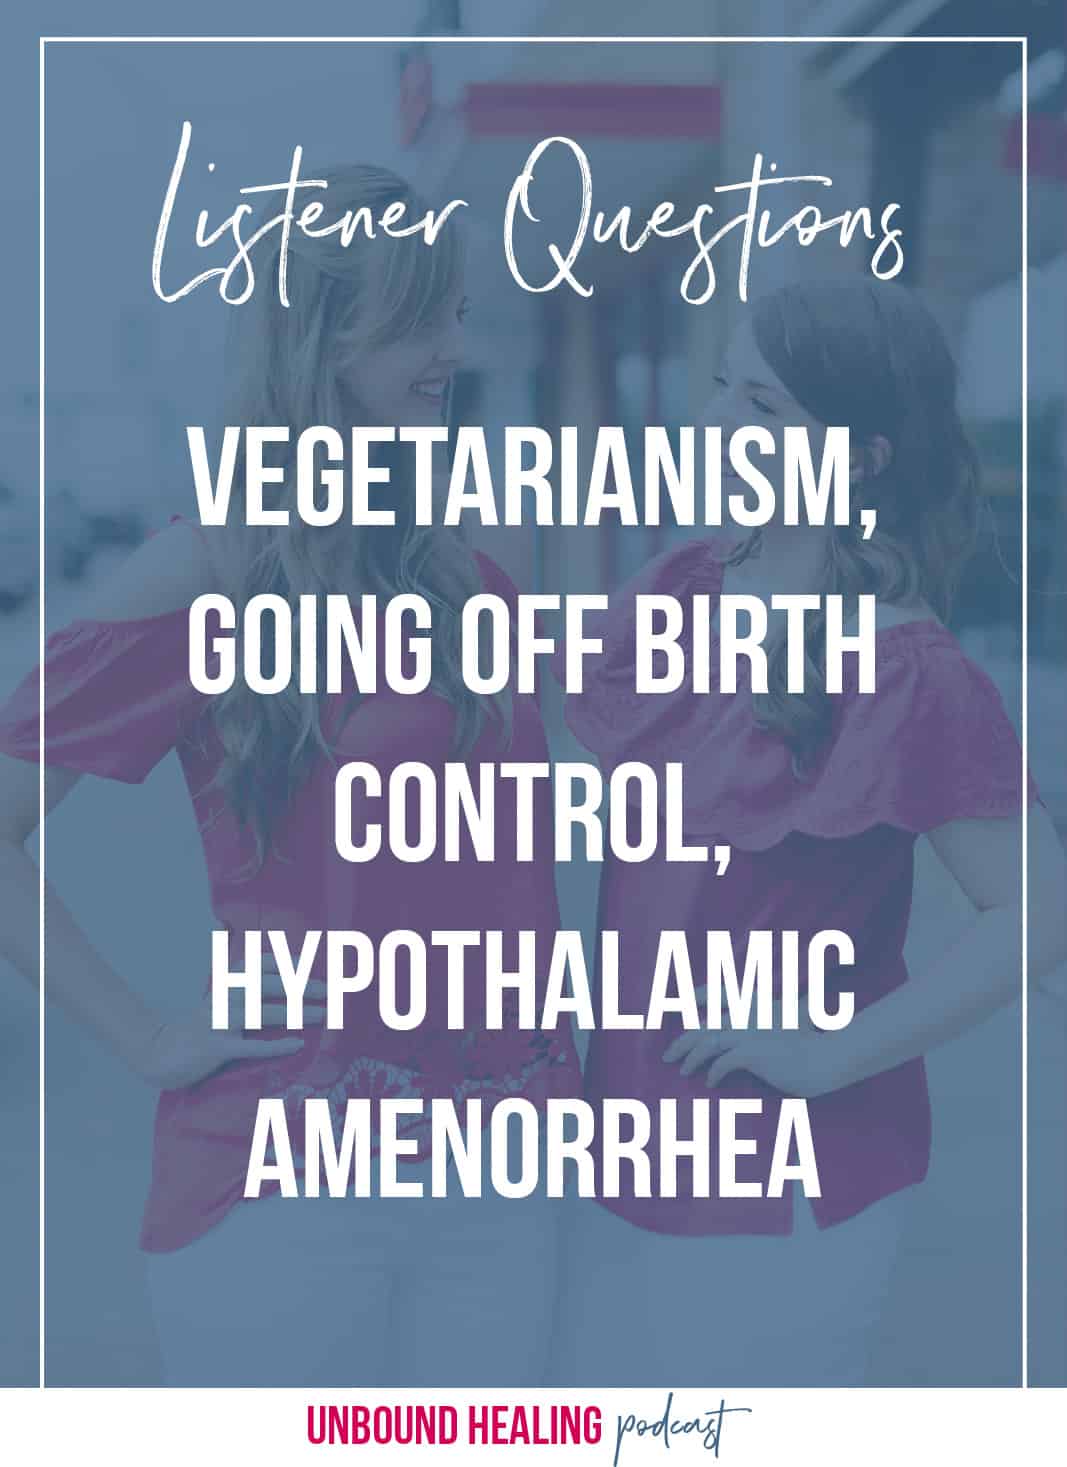 Vegetarianism, going off birth control, hypothalamic amenorrhea